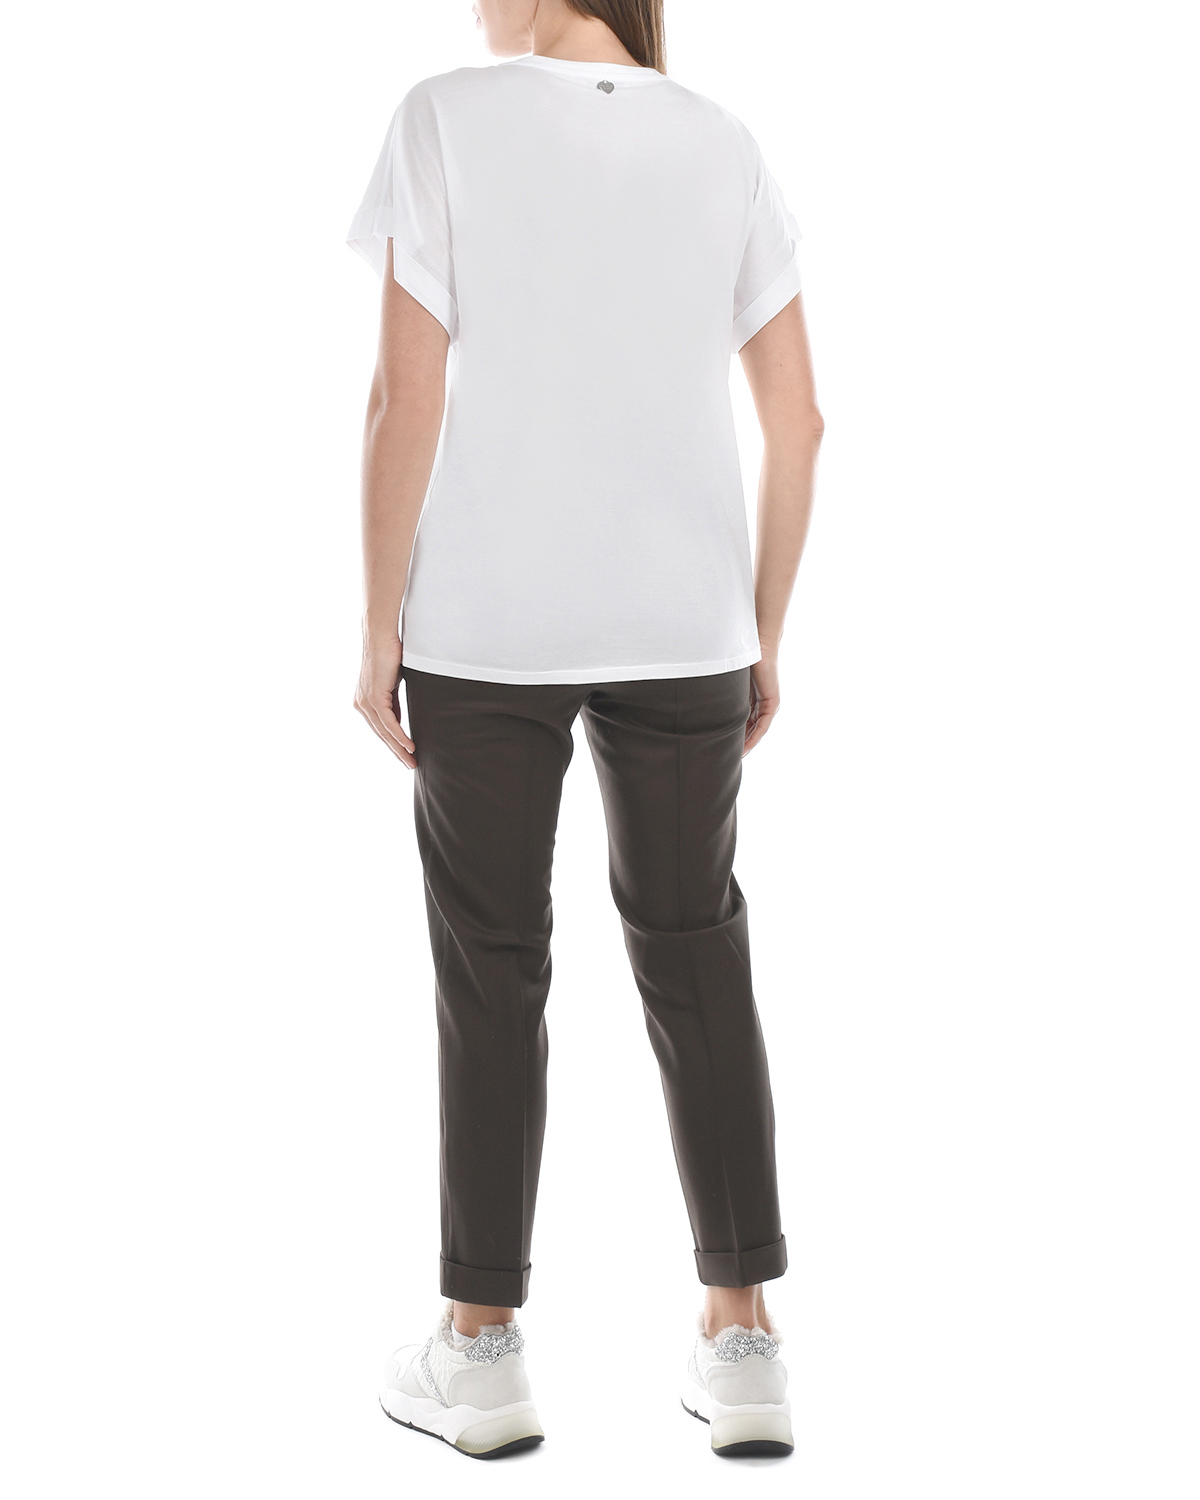 Белая футболка с вышивкой "Звезда" TWINSET, размер 38, цвет белый - фото 4